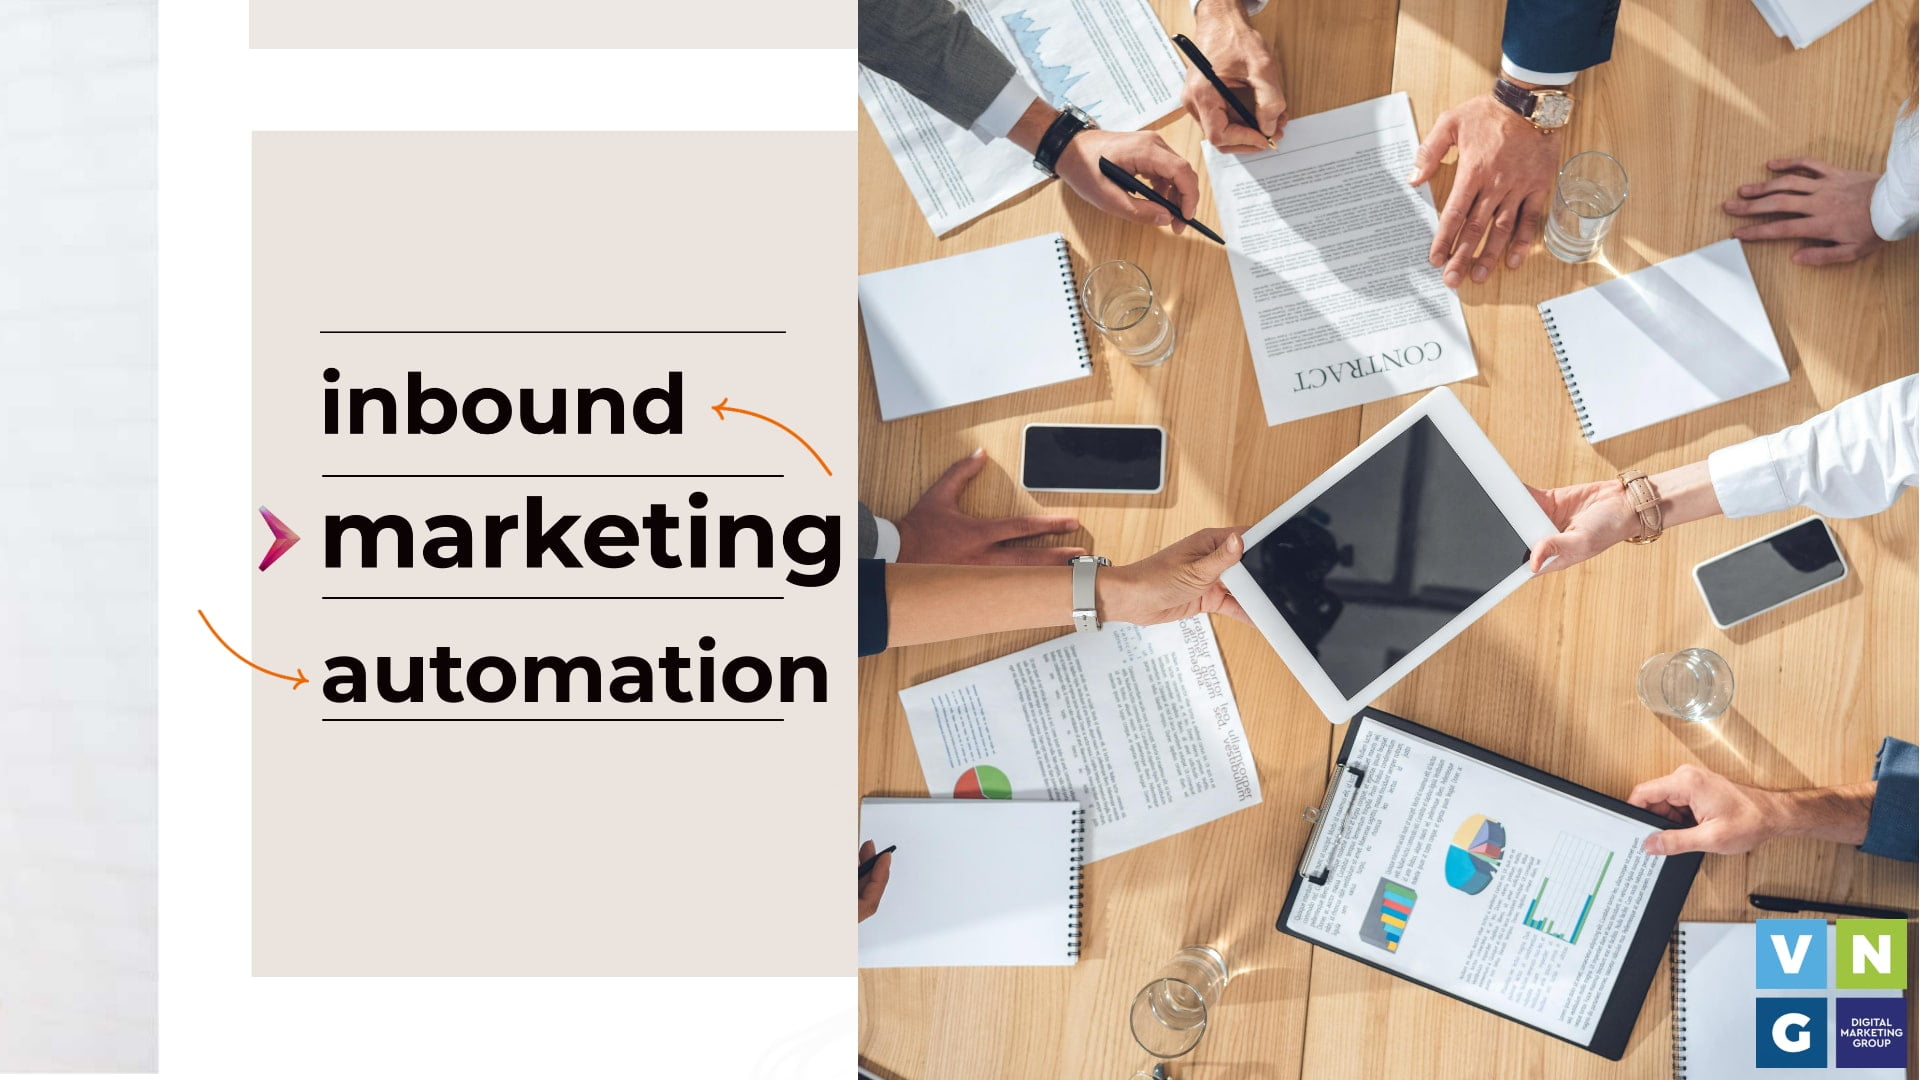 Inbound marketing: Τι είναι και τι διαφορές έχει με το marketing automation;